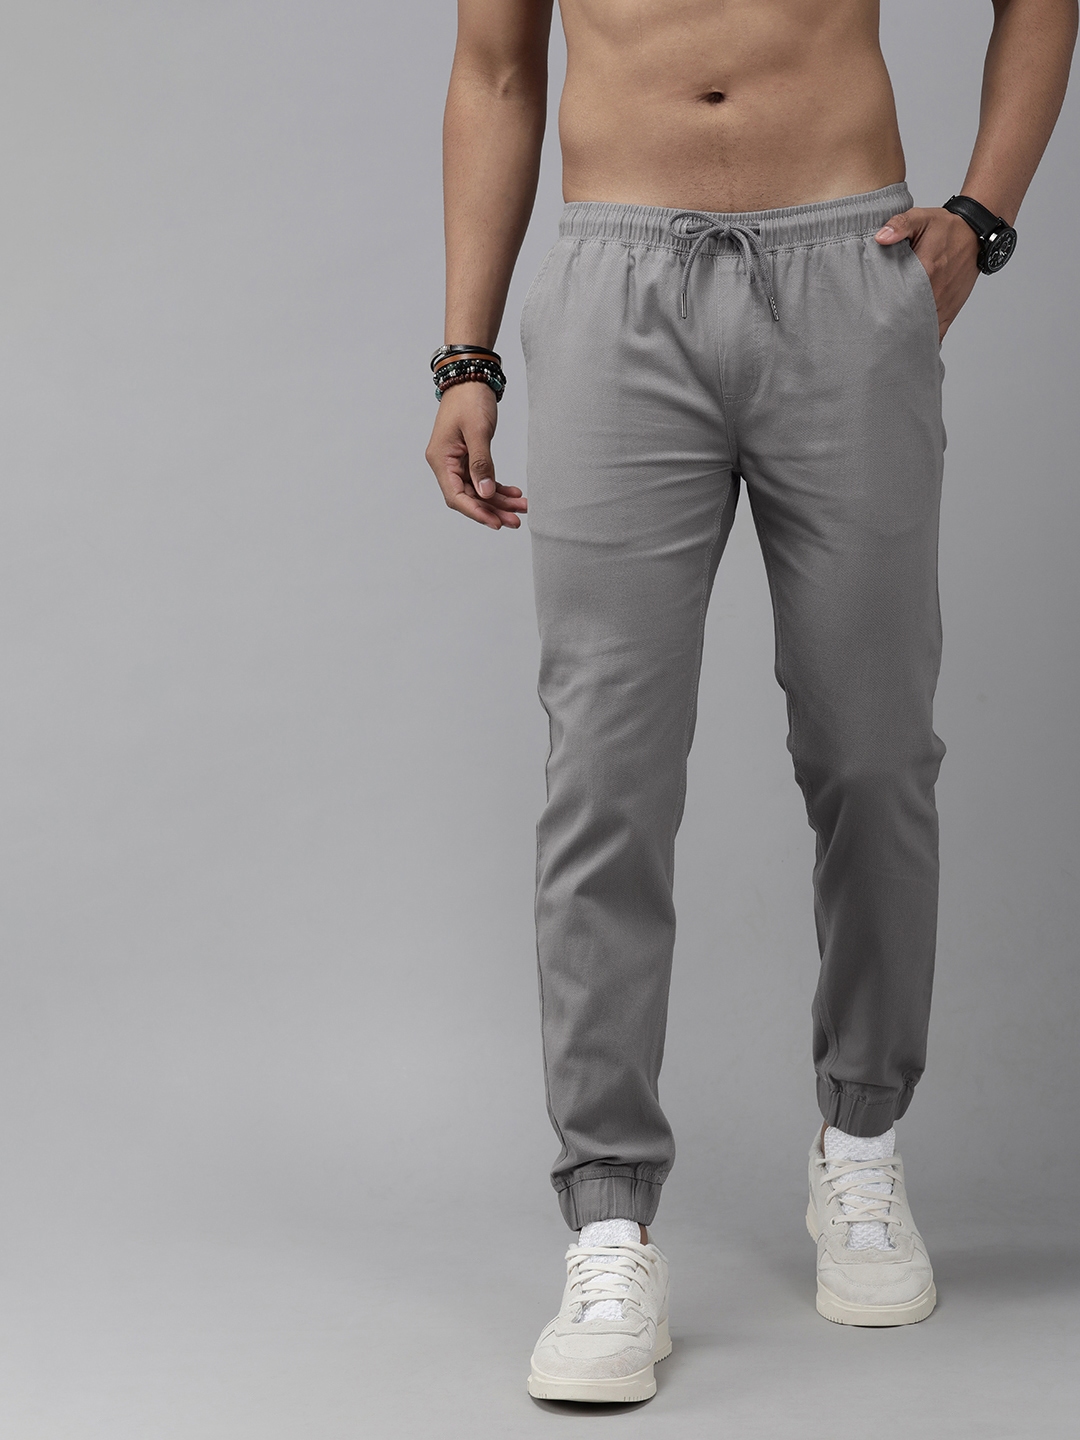 Buy Roadster Men Grey Joggers Trousers - Trousers for Men 14638674 | Myntra